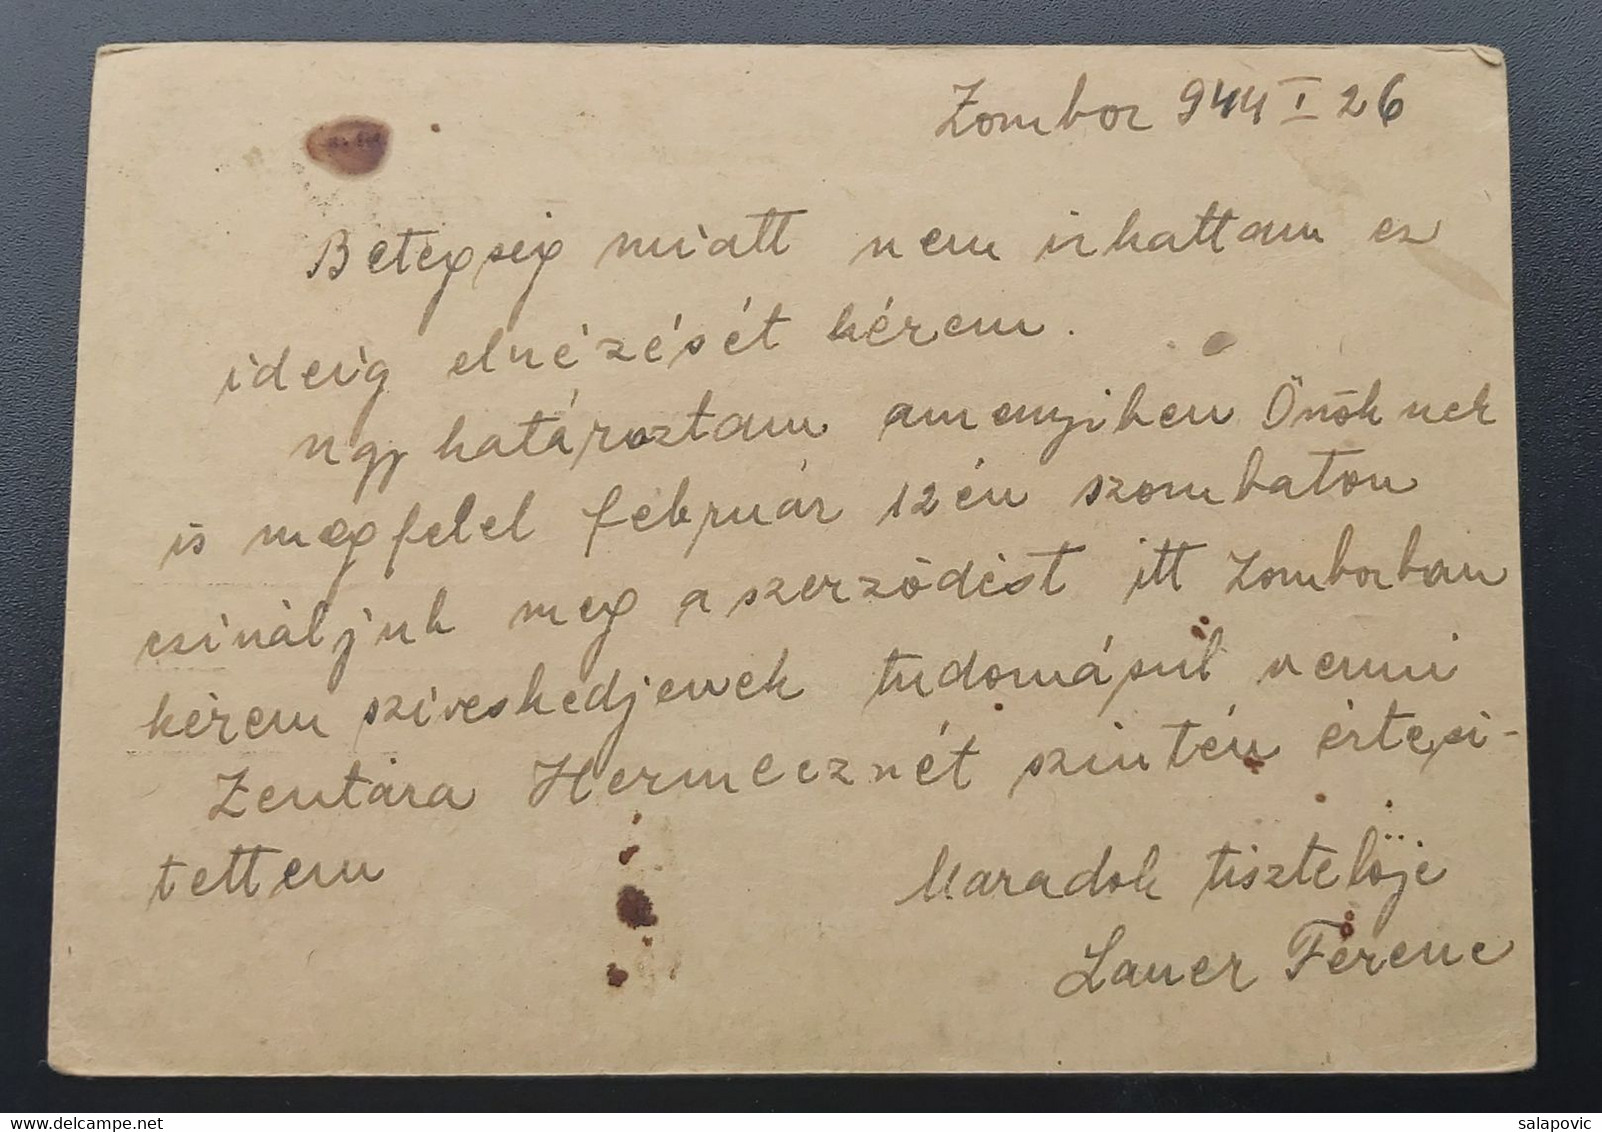 Hungary - Tábori Posta -1944 Zombor Levelezolap  4/45 - Lettres & Documents